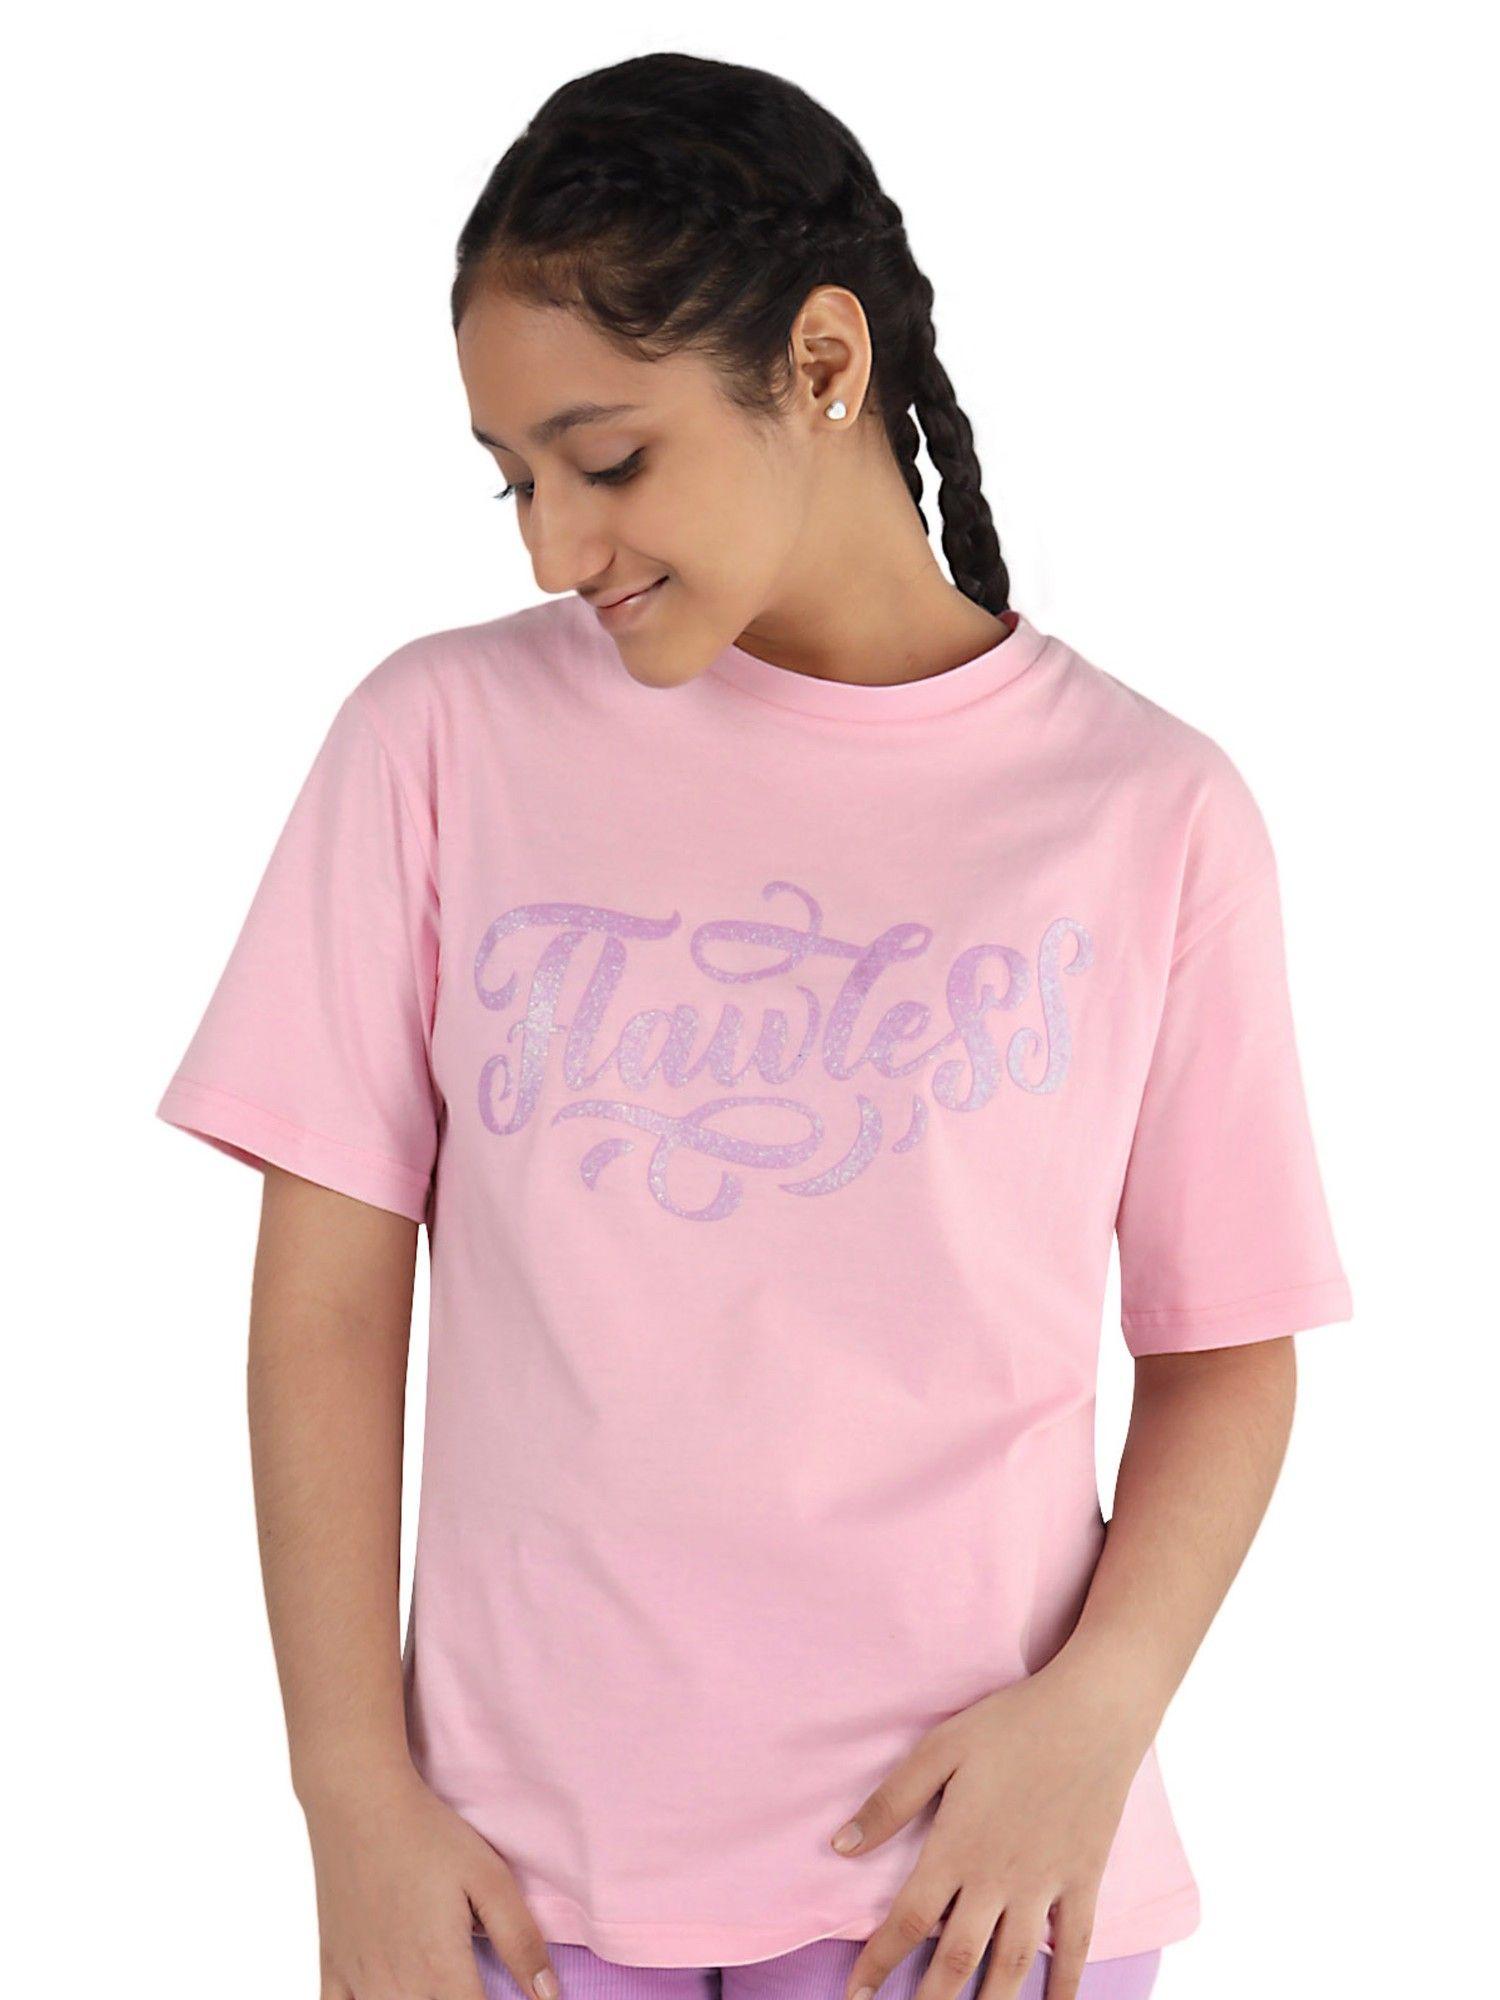 Girls Pink T-Shirt Typography